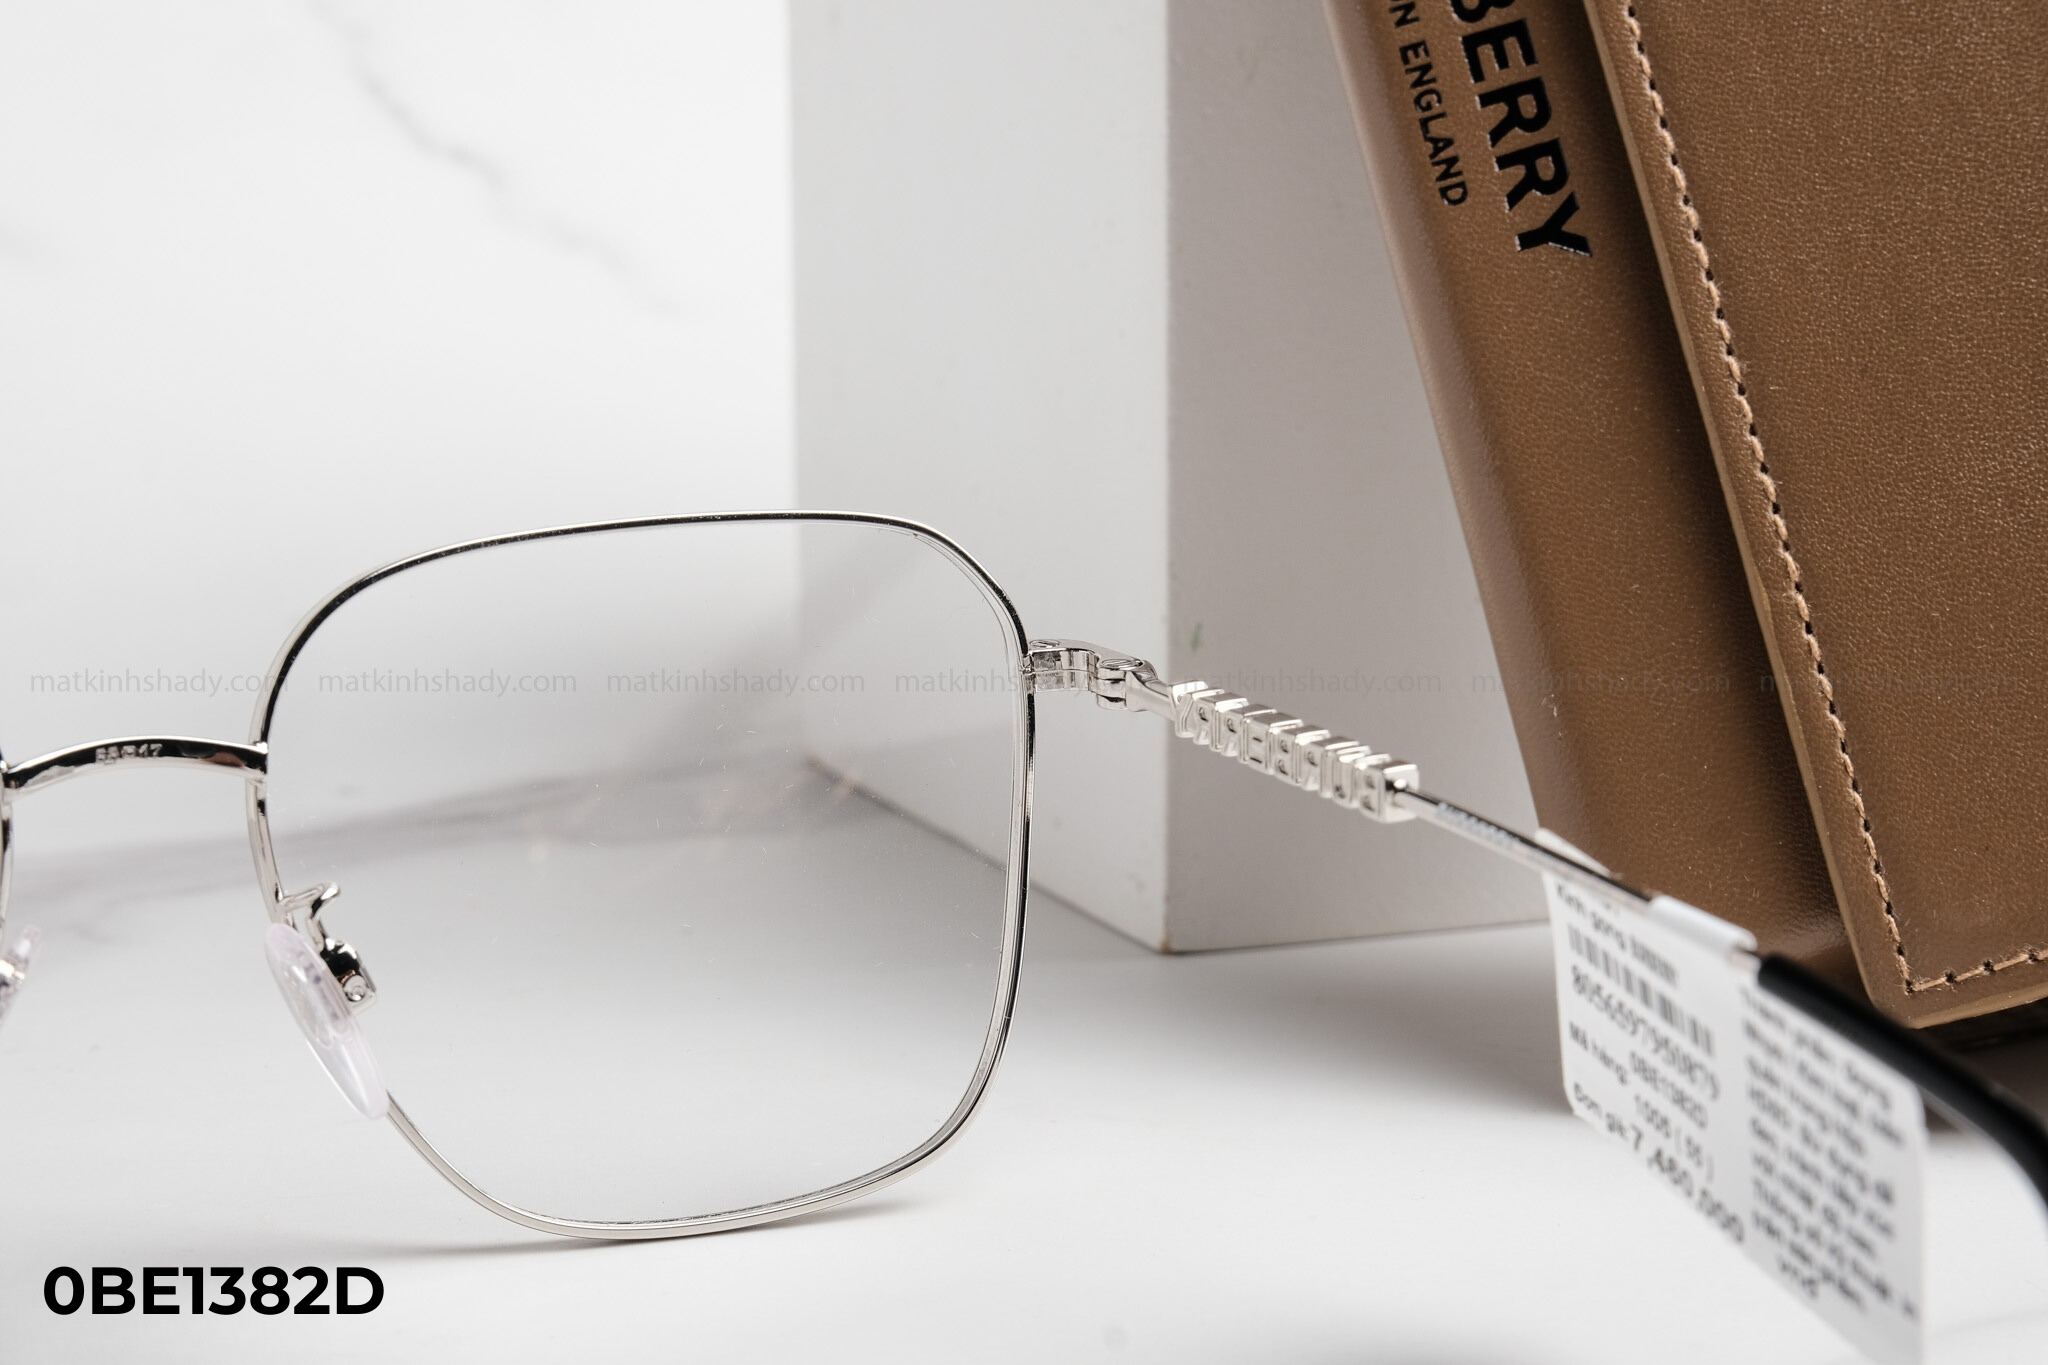  Burberry Eyewear - Glasses - 0BE1382D 